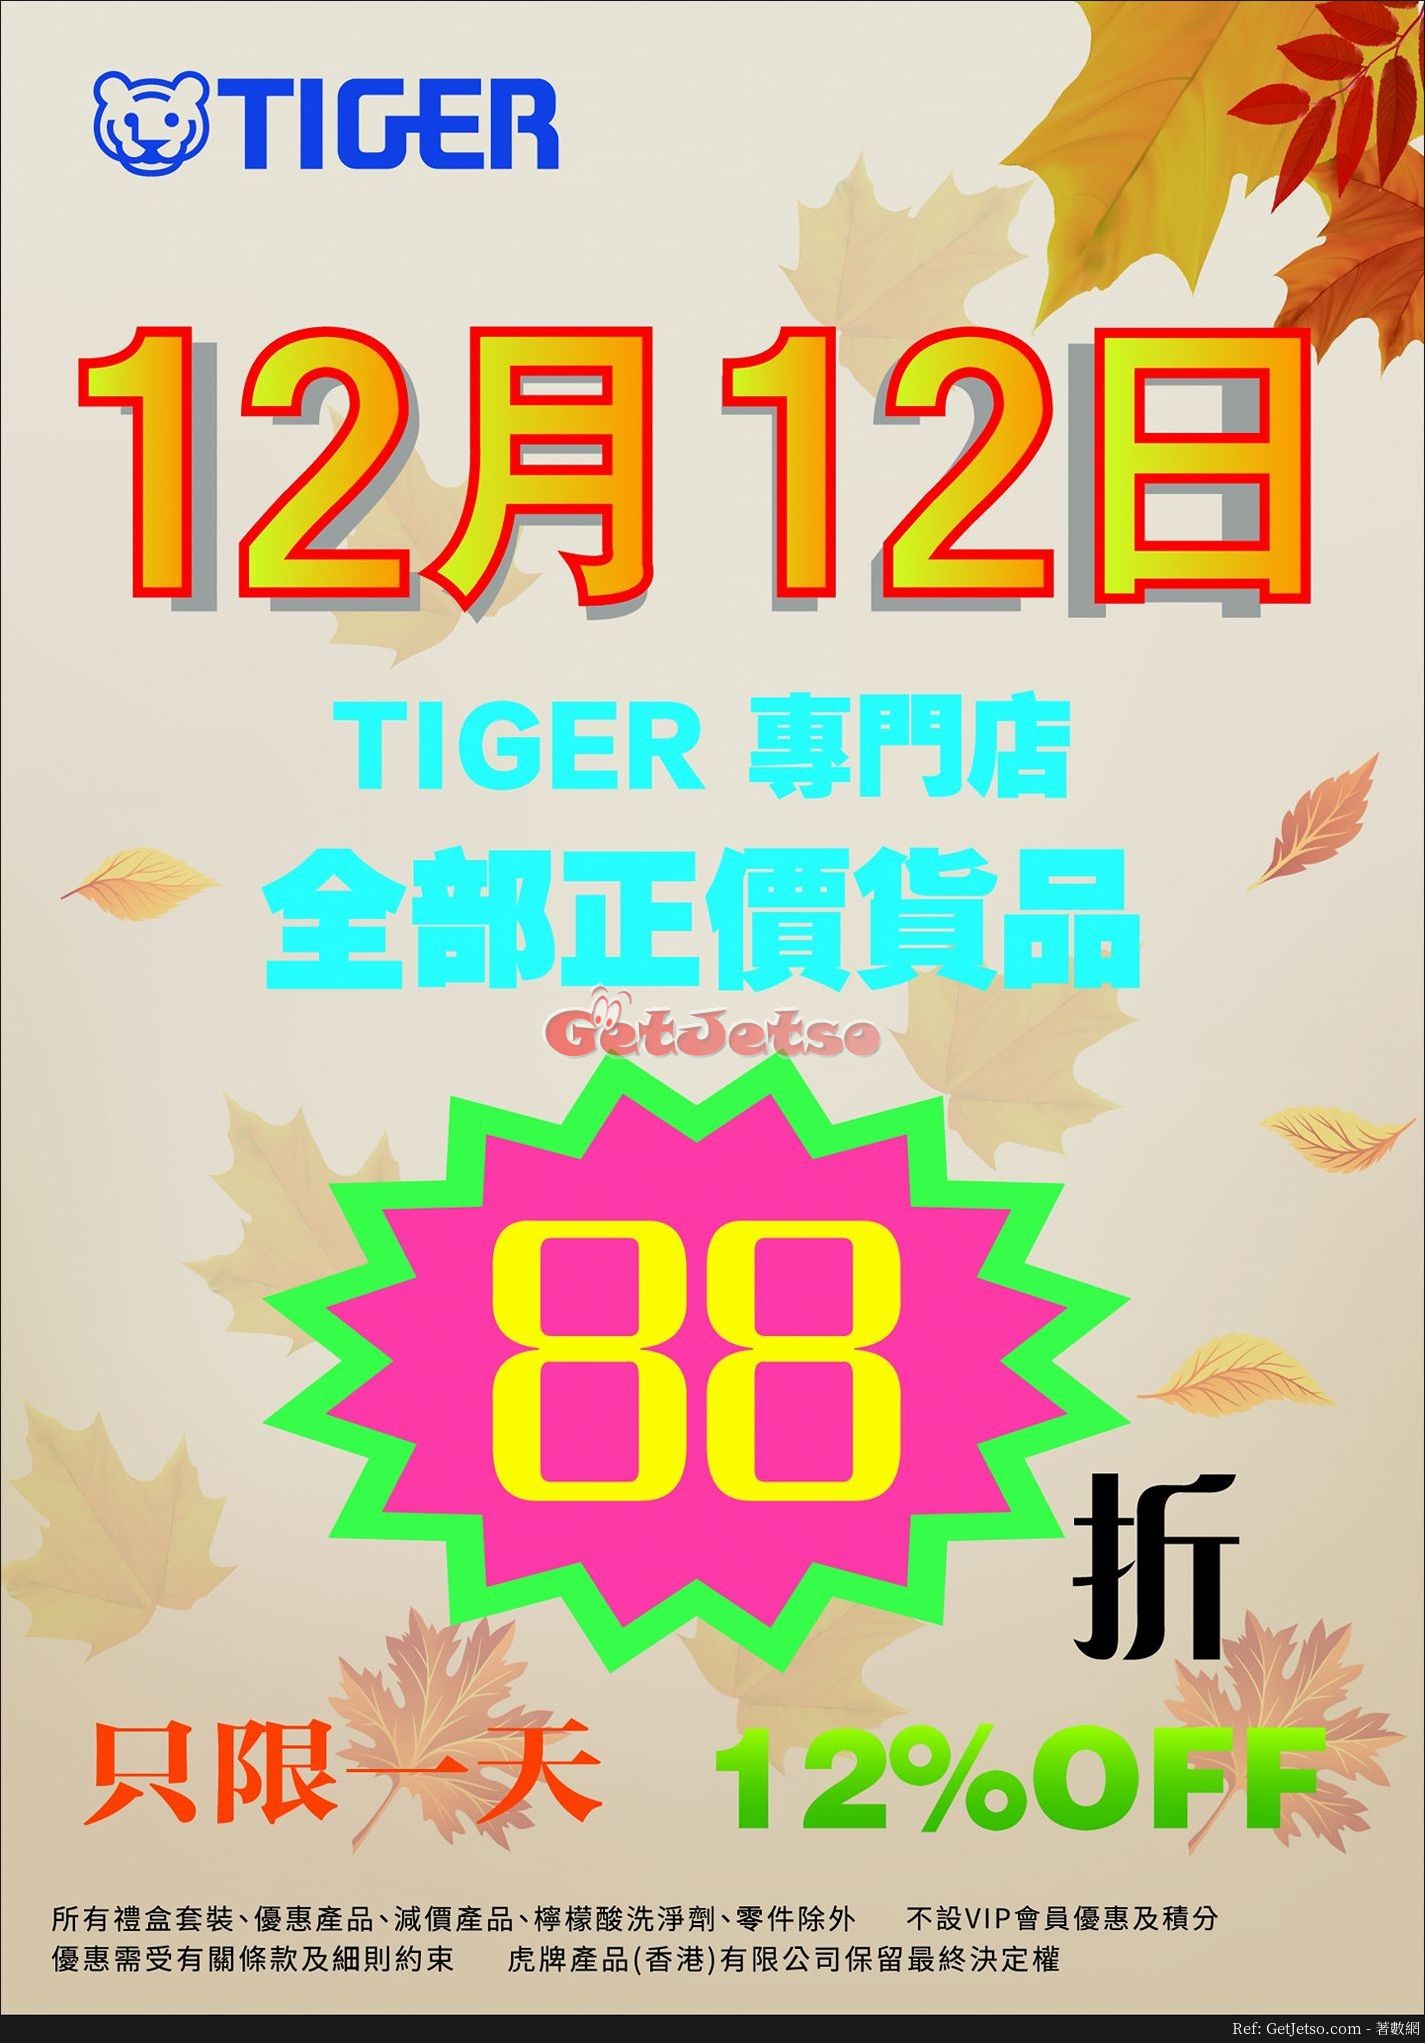 Tiger 虎牌12月12日全店88折優惠(至17年12月12日)圖片1